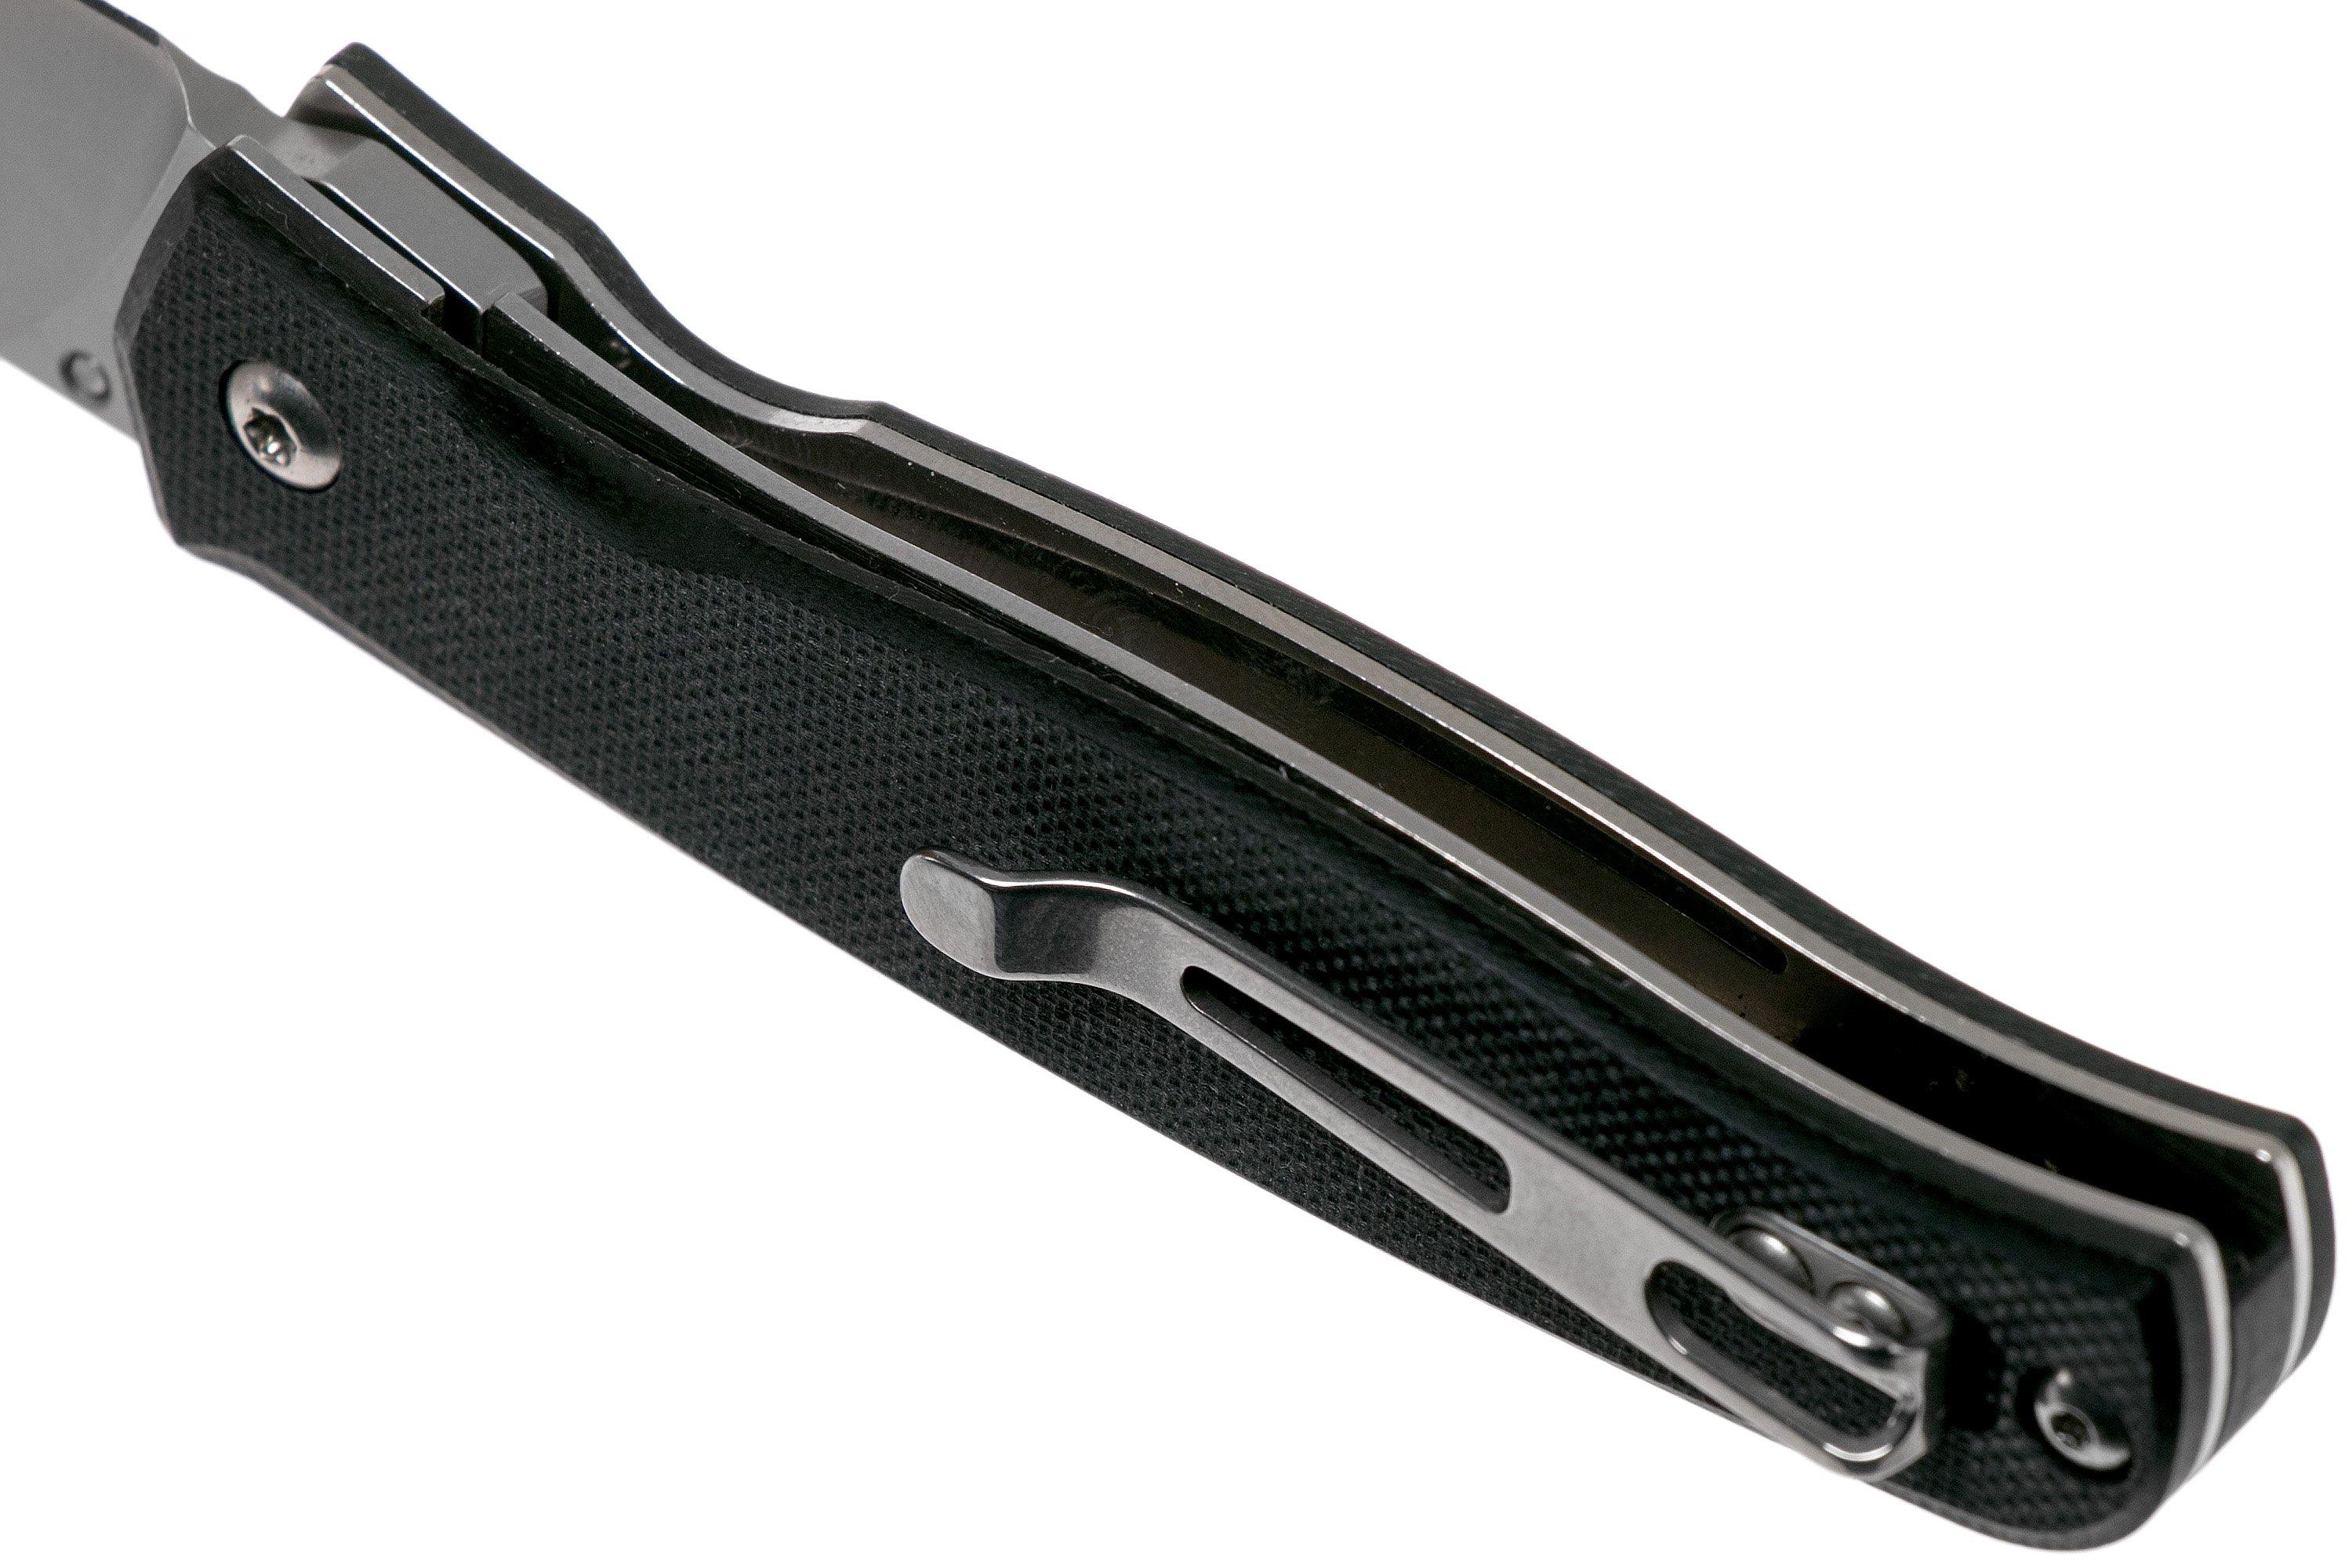  P661-B Black Taschenmesser | Günstiger shoppen bei knivesandtools.de